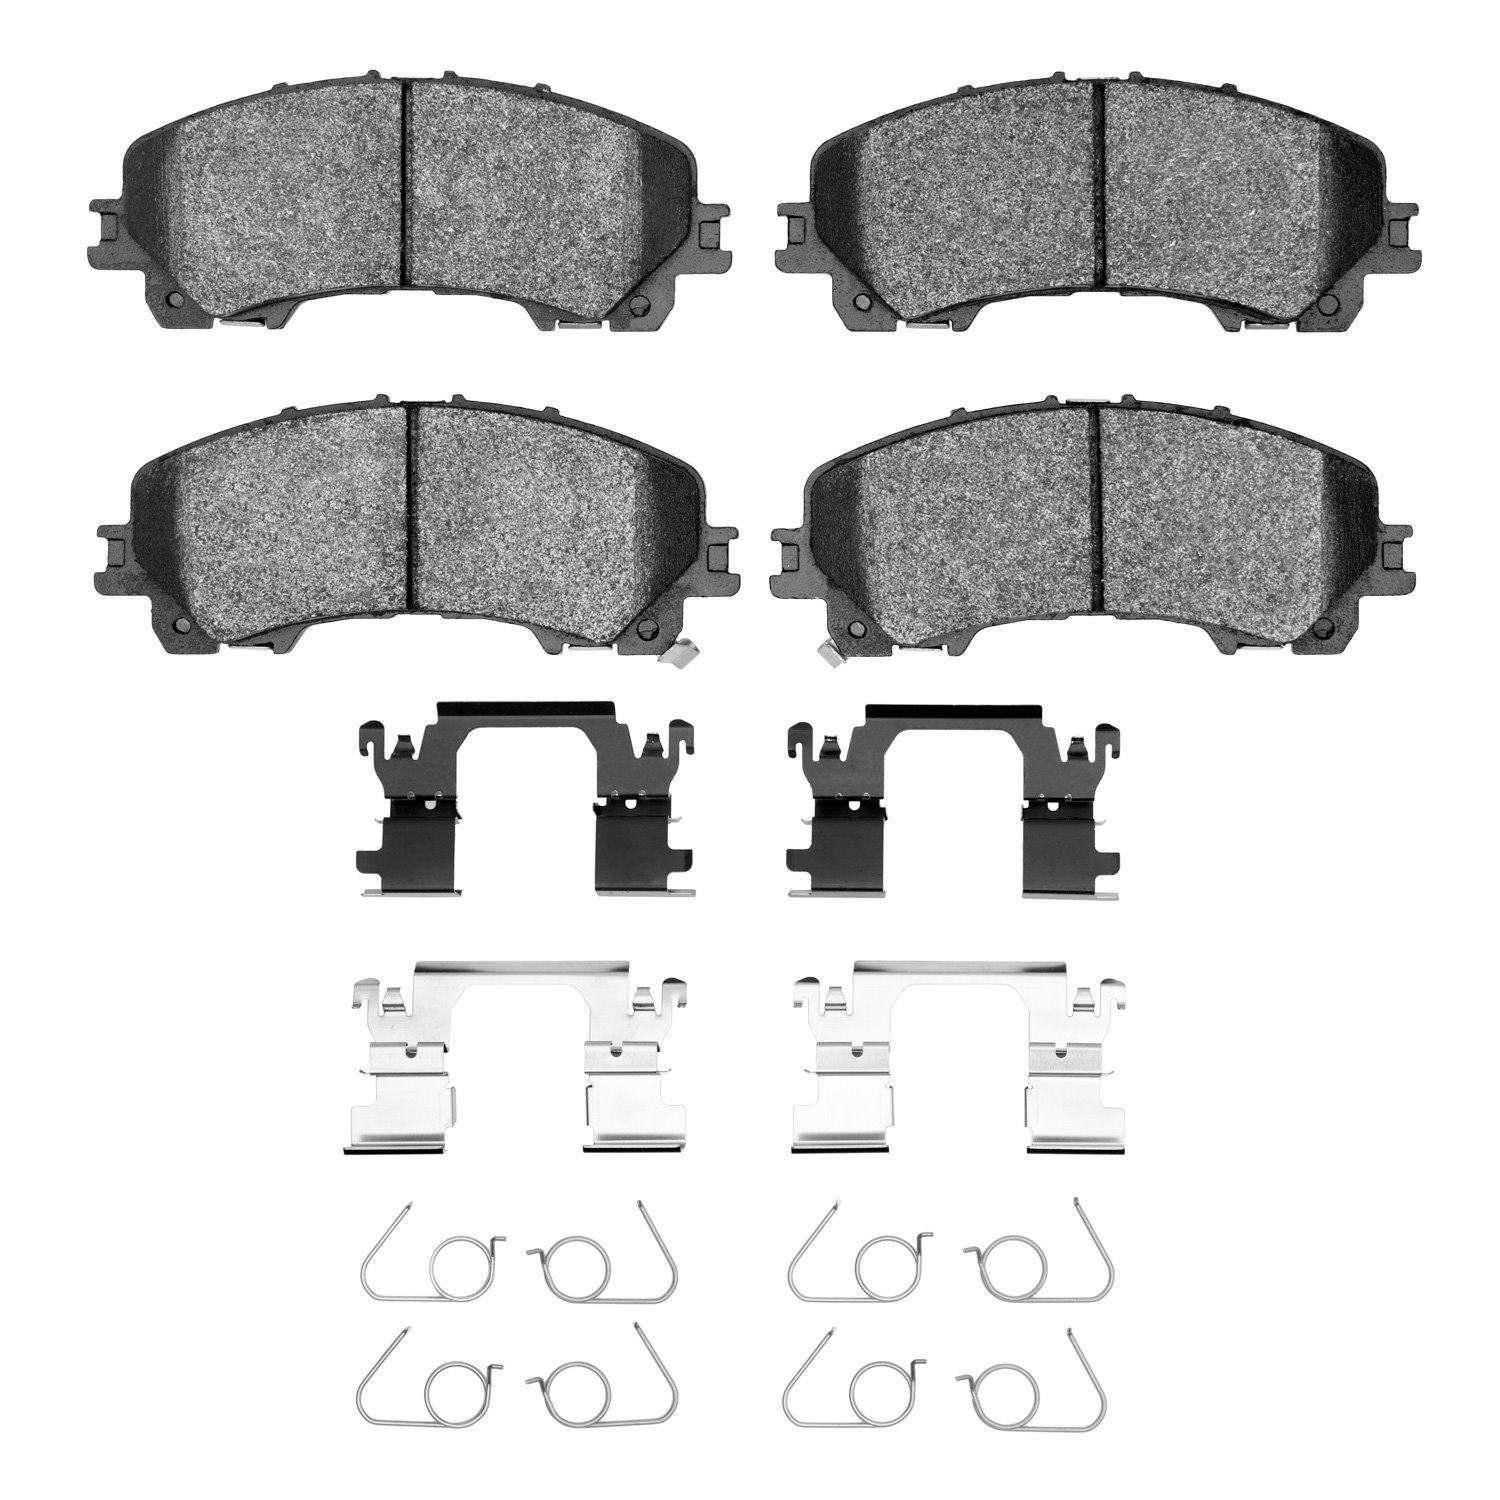 1551-1736-01 5000 Advanced Ceramic Brake Pads & Hardware Kit, Fits Select Infiniti/Nissan, Position: Front